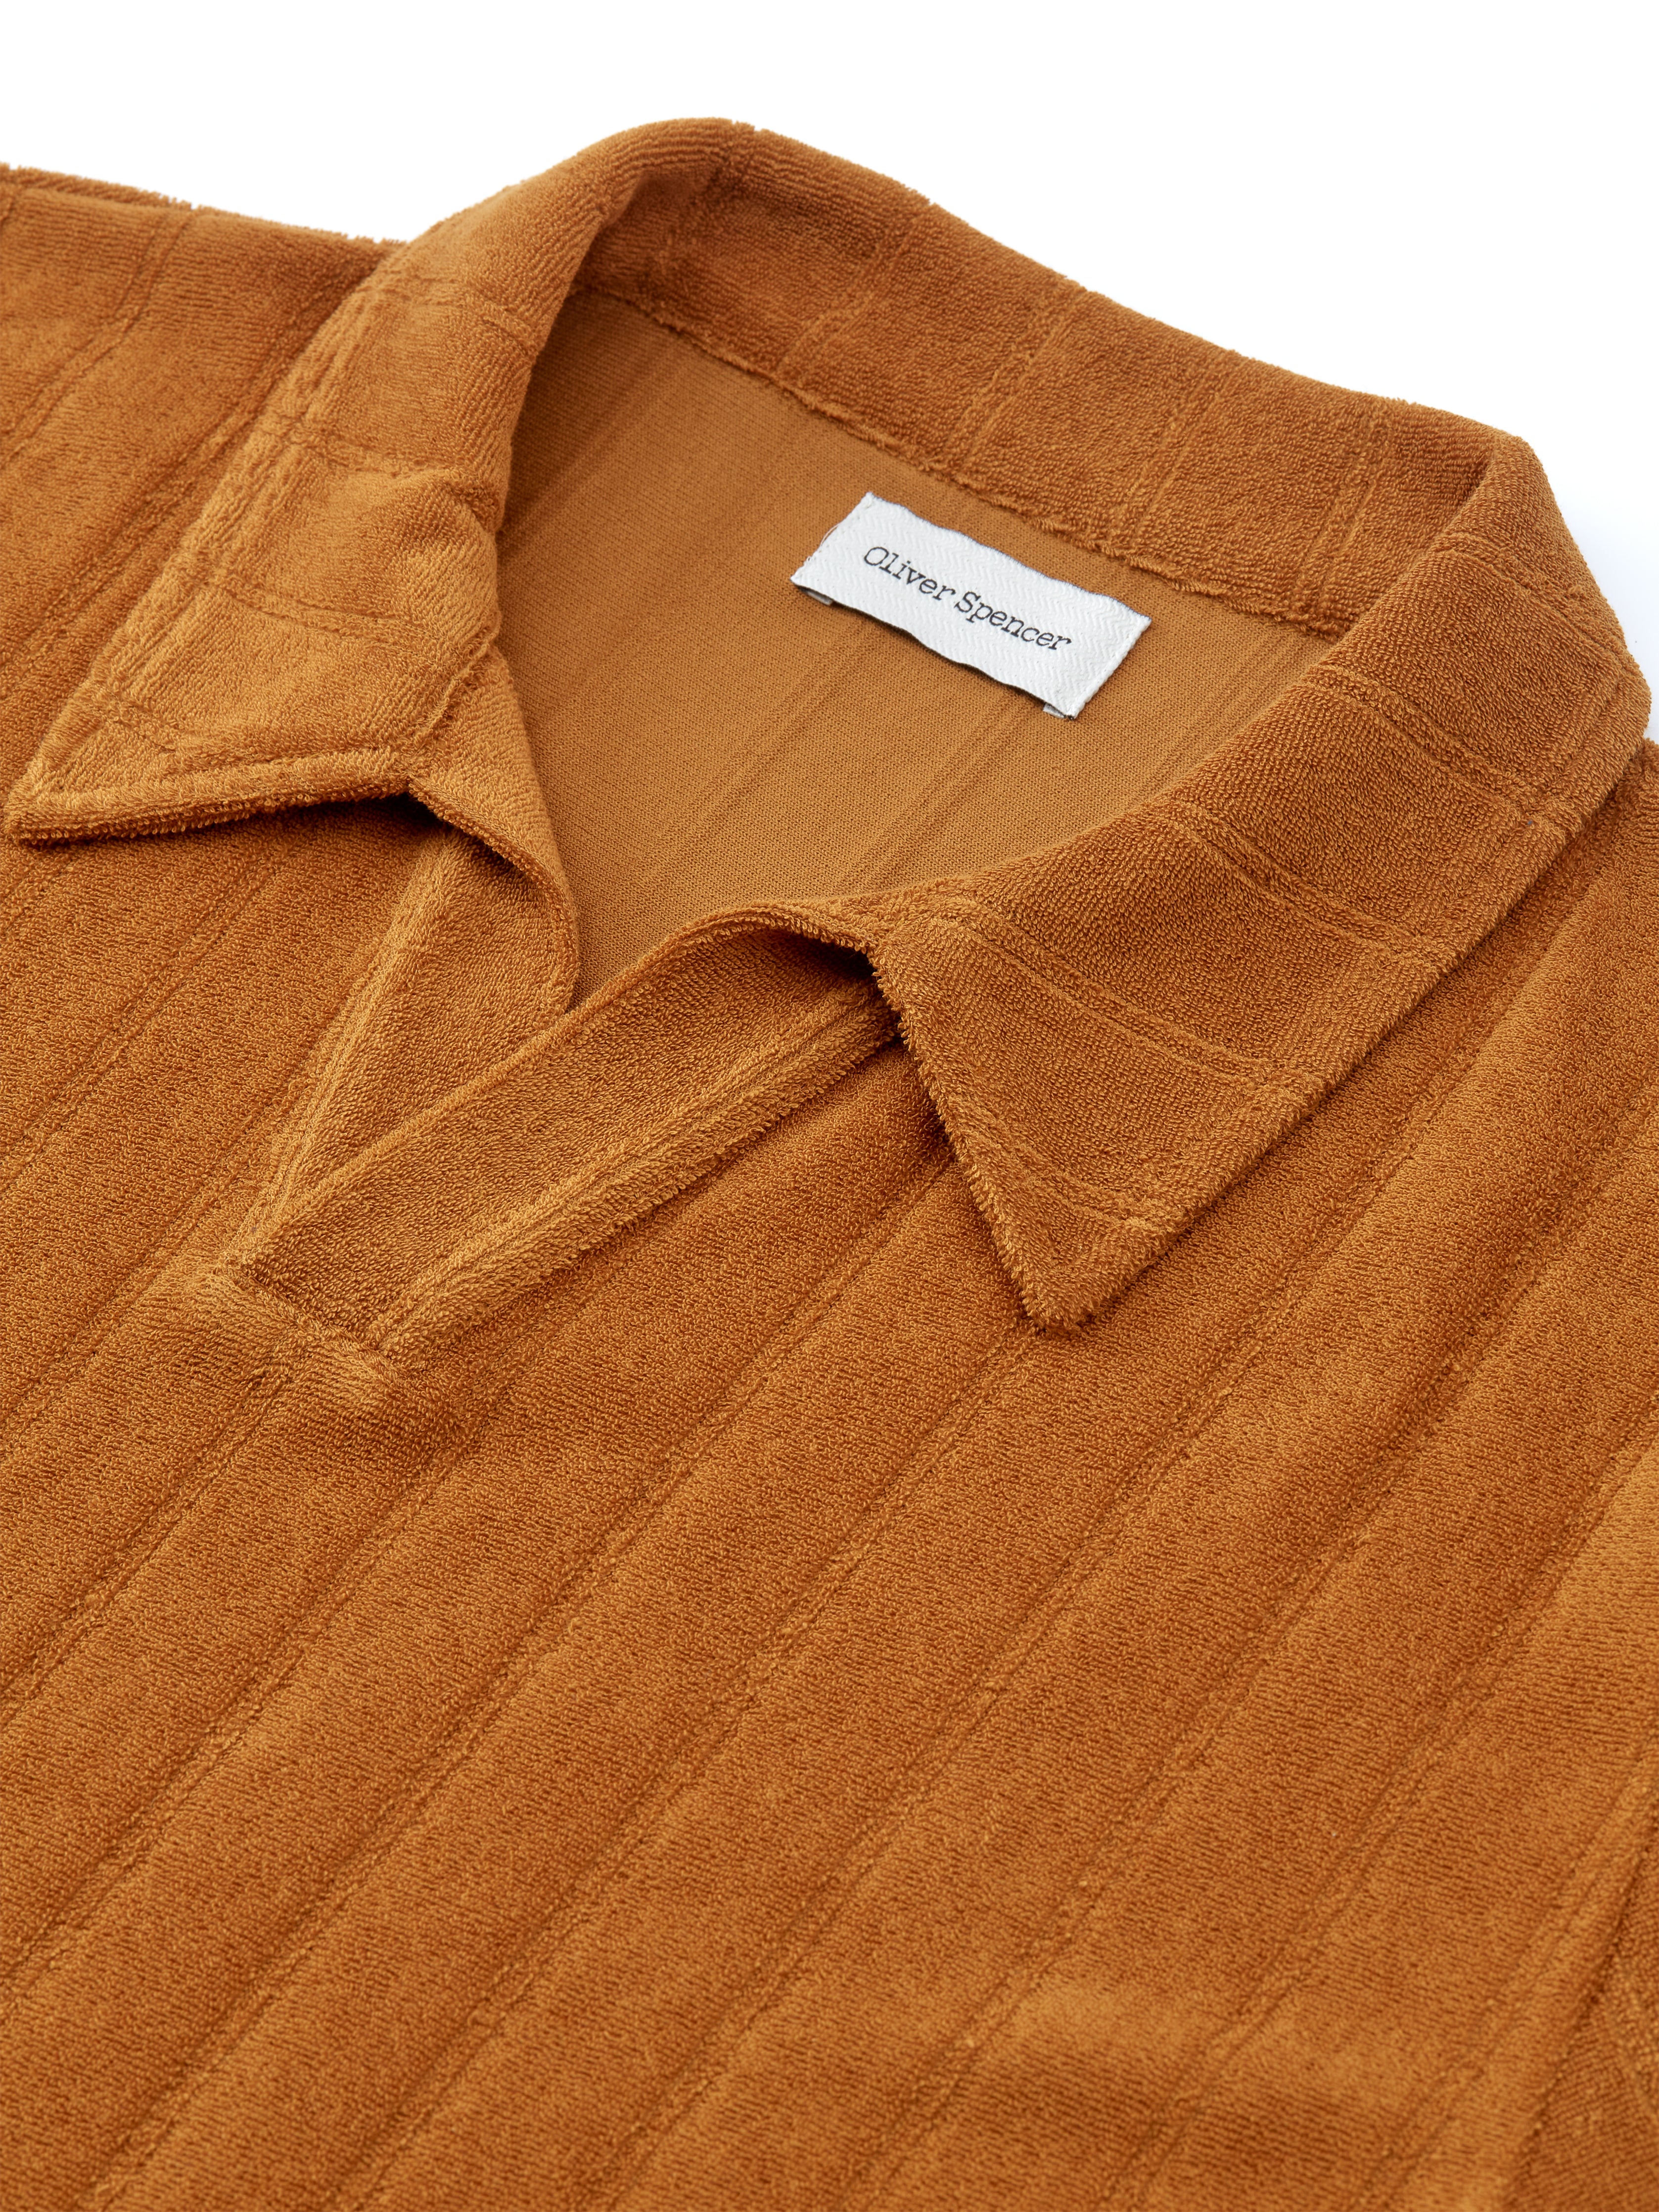 Austell Short Sleeve Polo Shirt Haywood Ochre